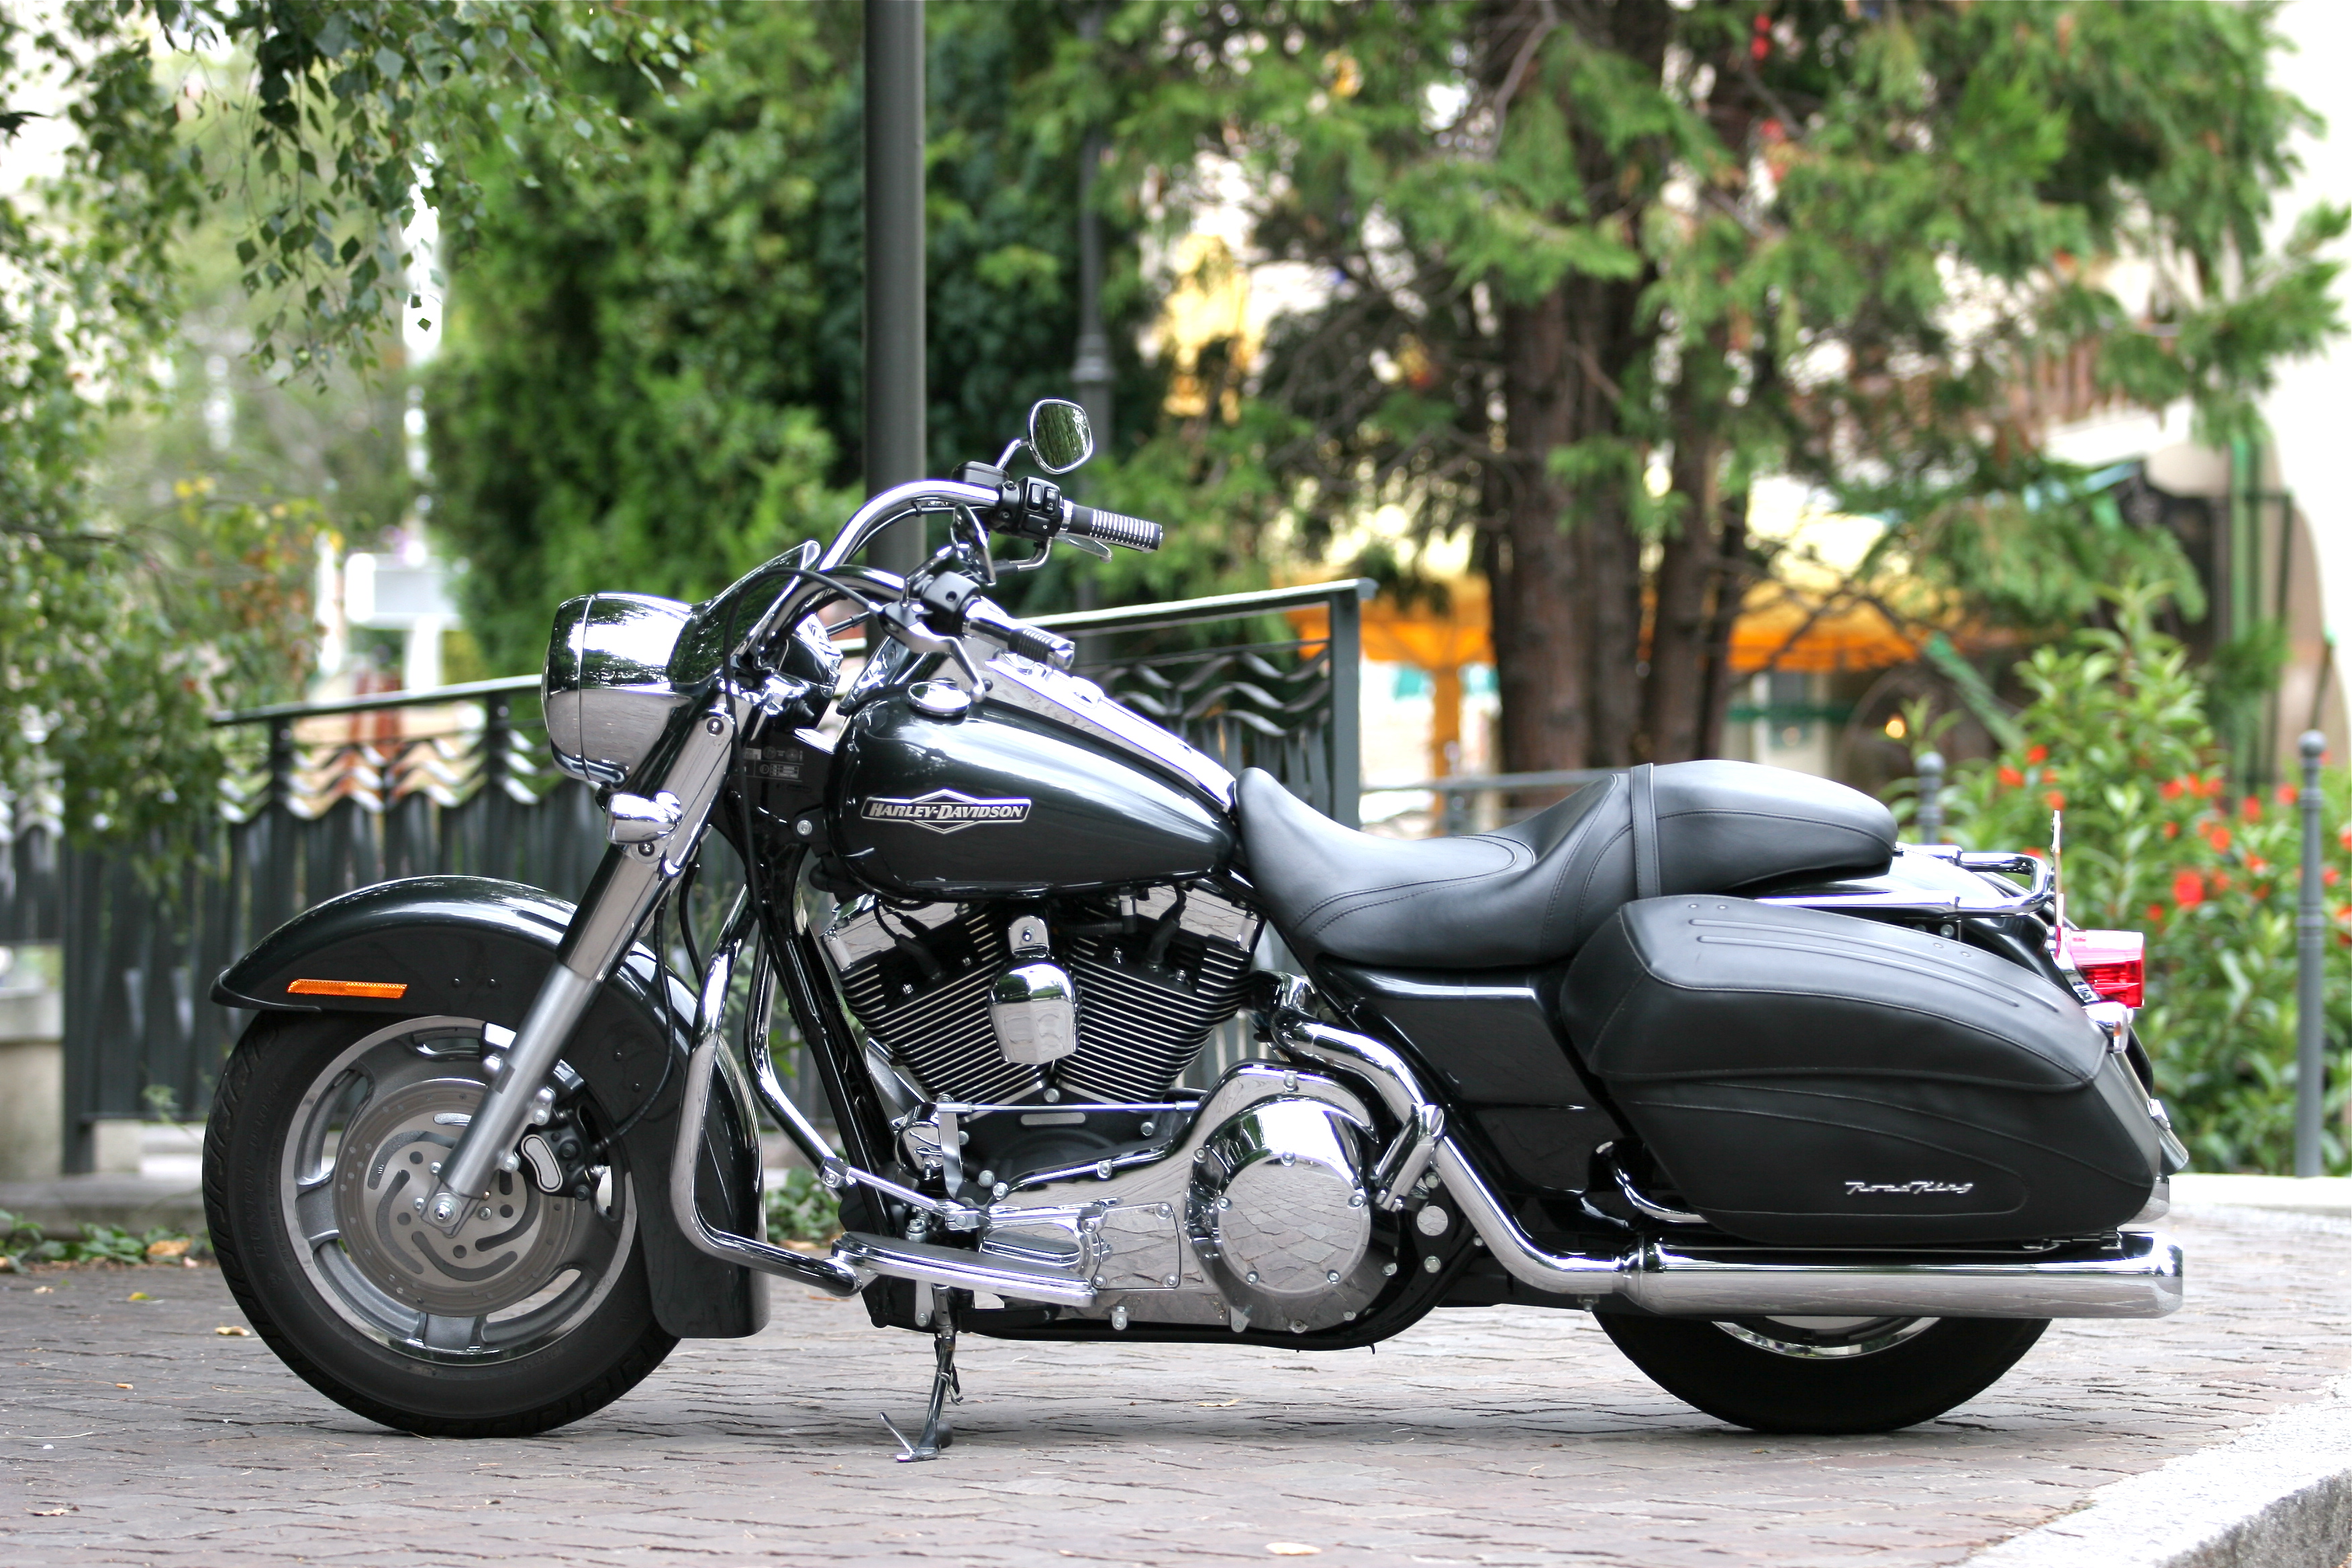 Harley-Davidson Road King #8